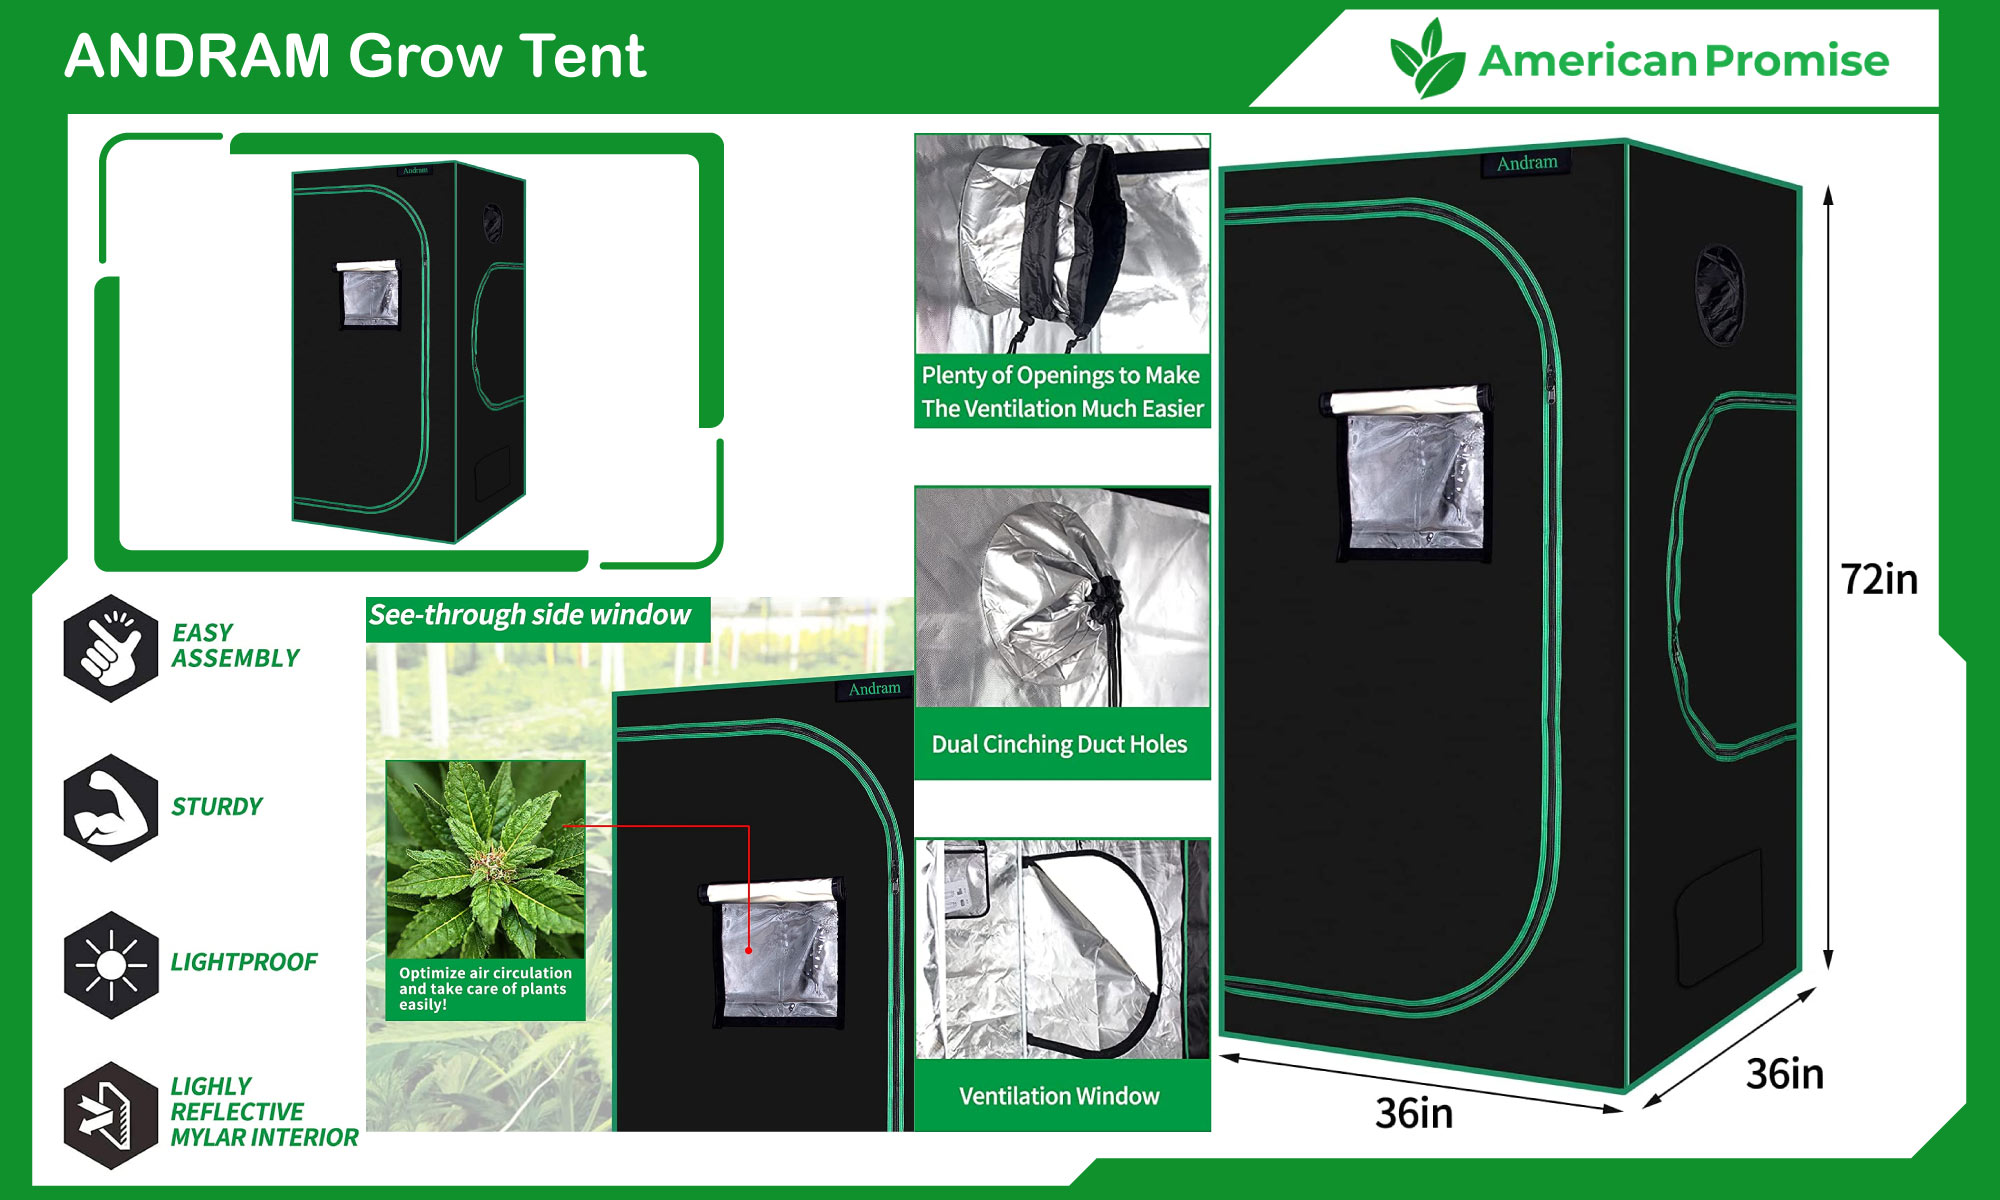 ANDRAM Grow Tent